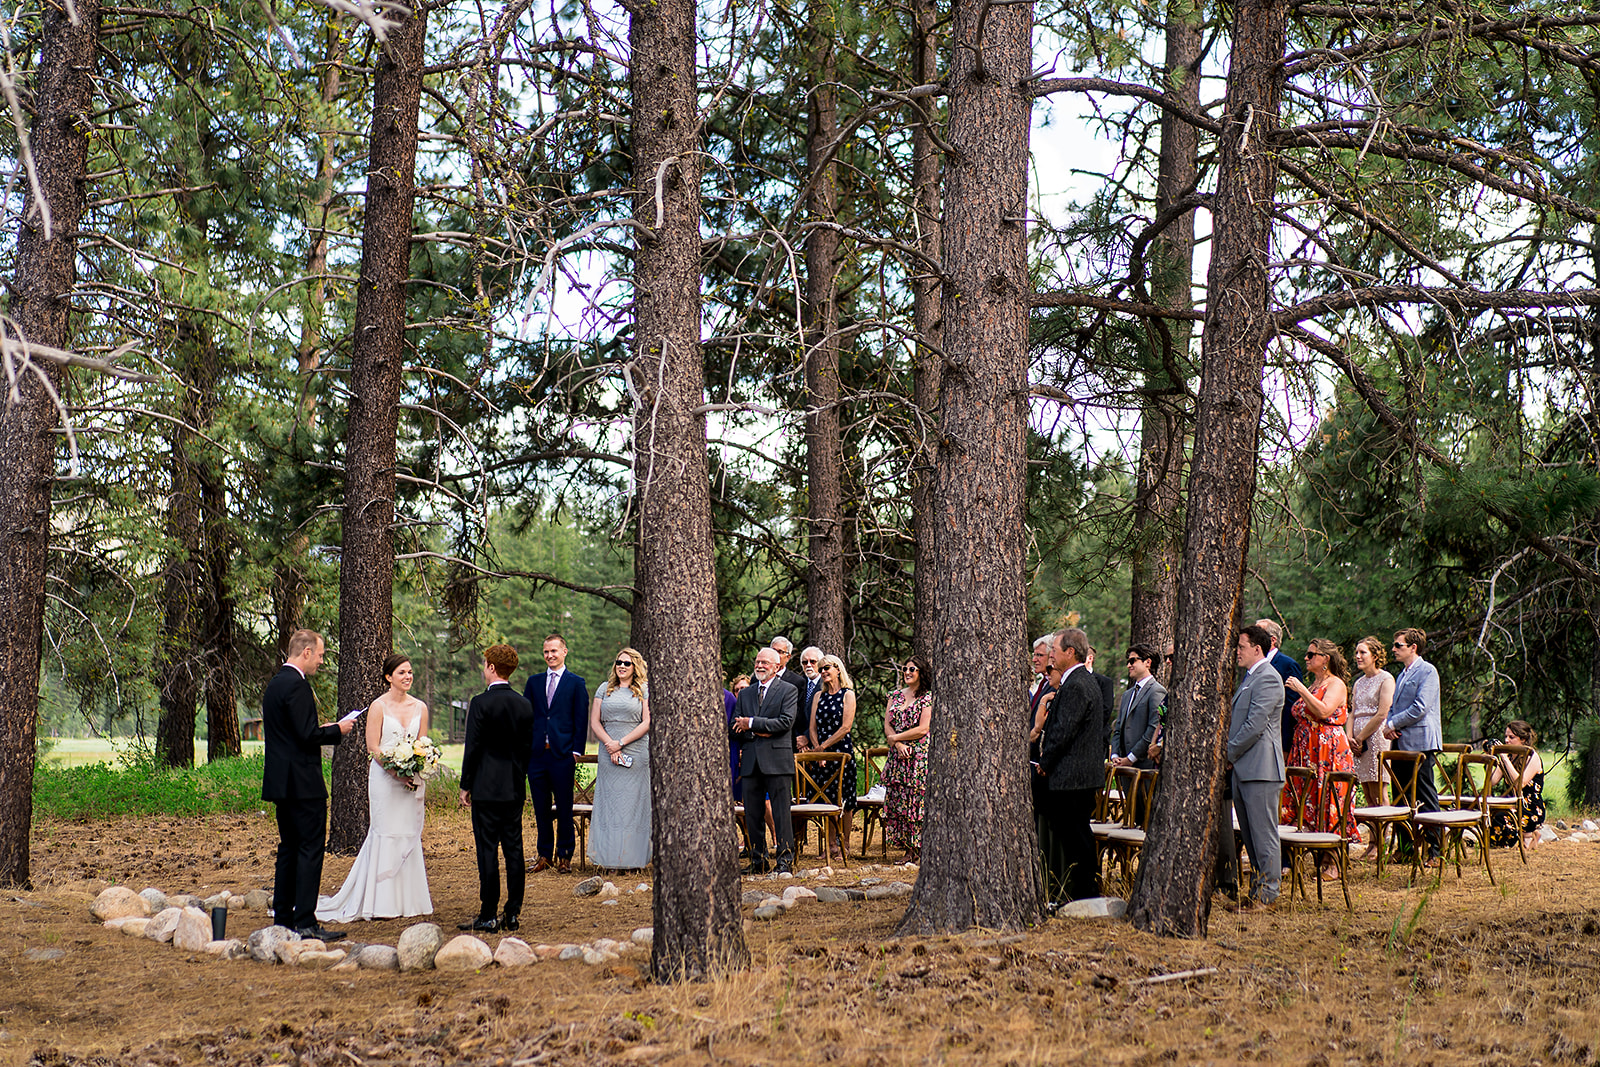 Mazama Ranch House Wedding forests ceremony location